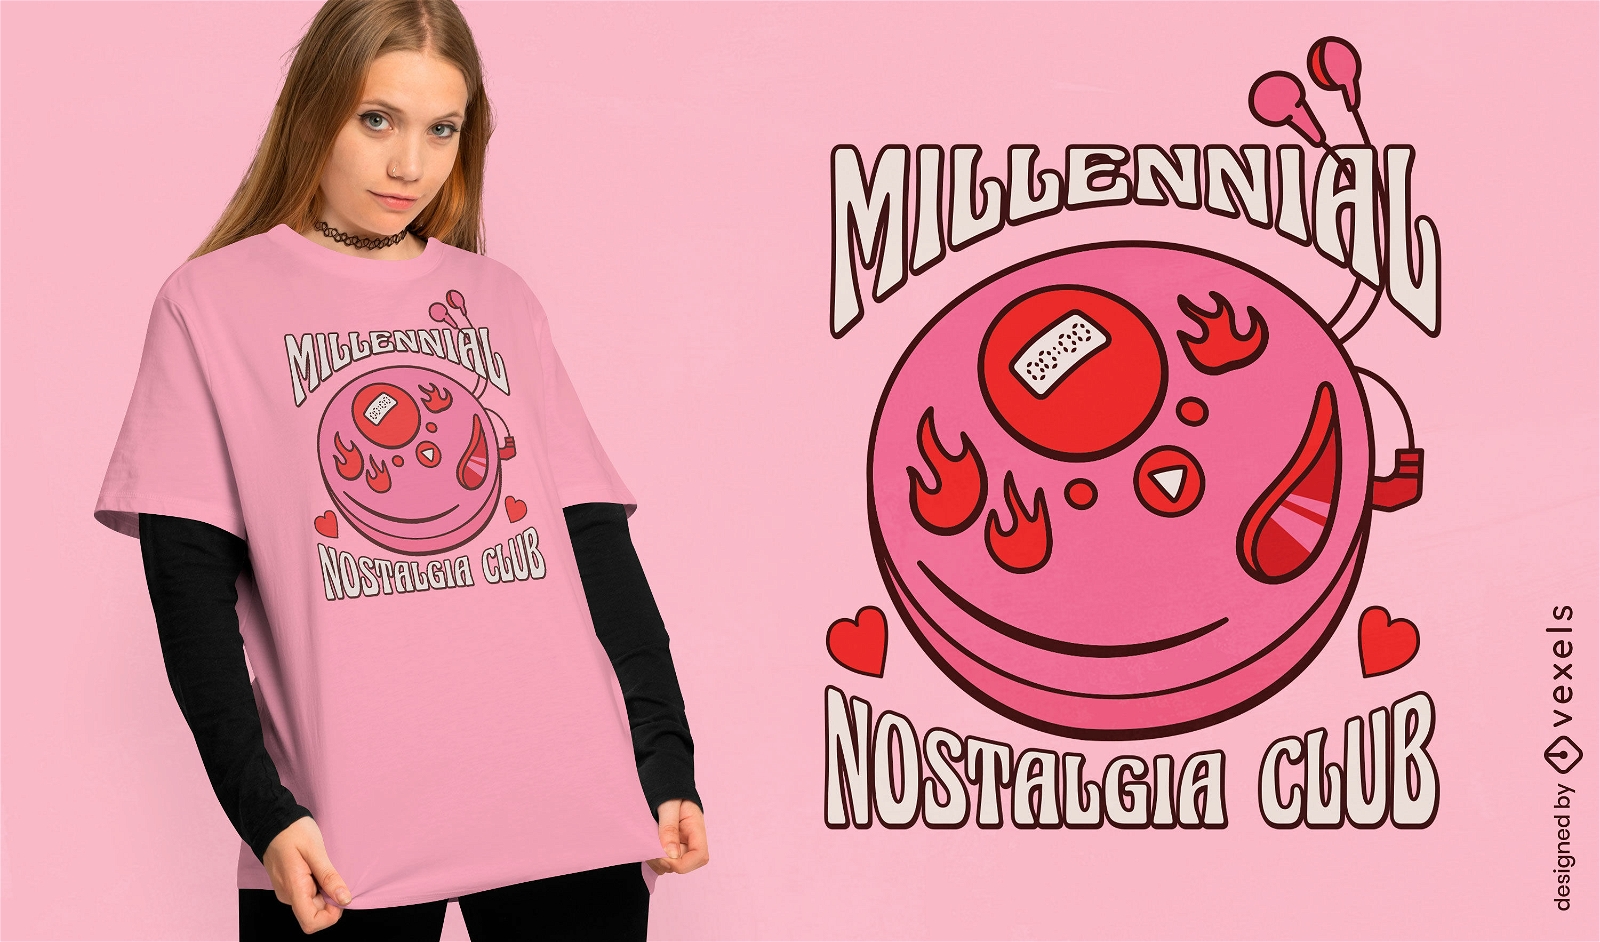 Millennial nostalgia club t-shirt design